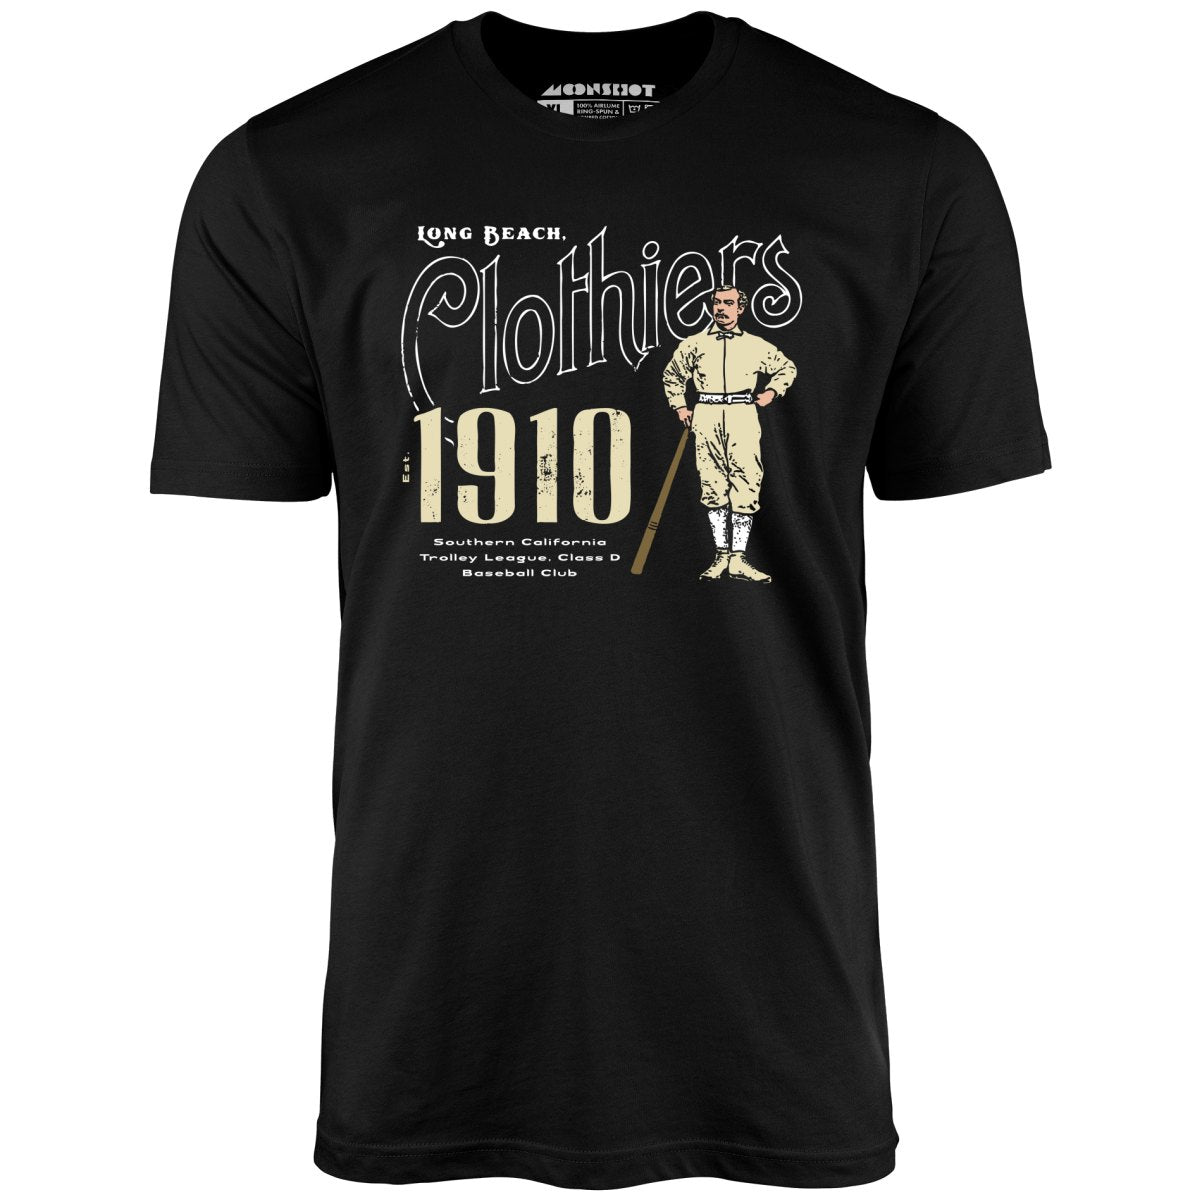 Long Beach Clothiers - California - Vintage Defunct Baseball Teams - Unisex T-Shirt